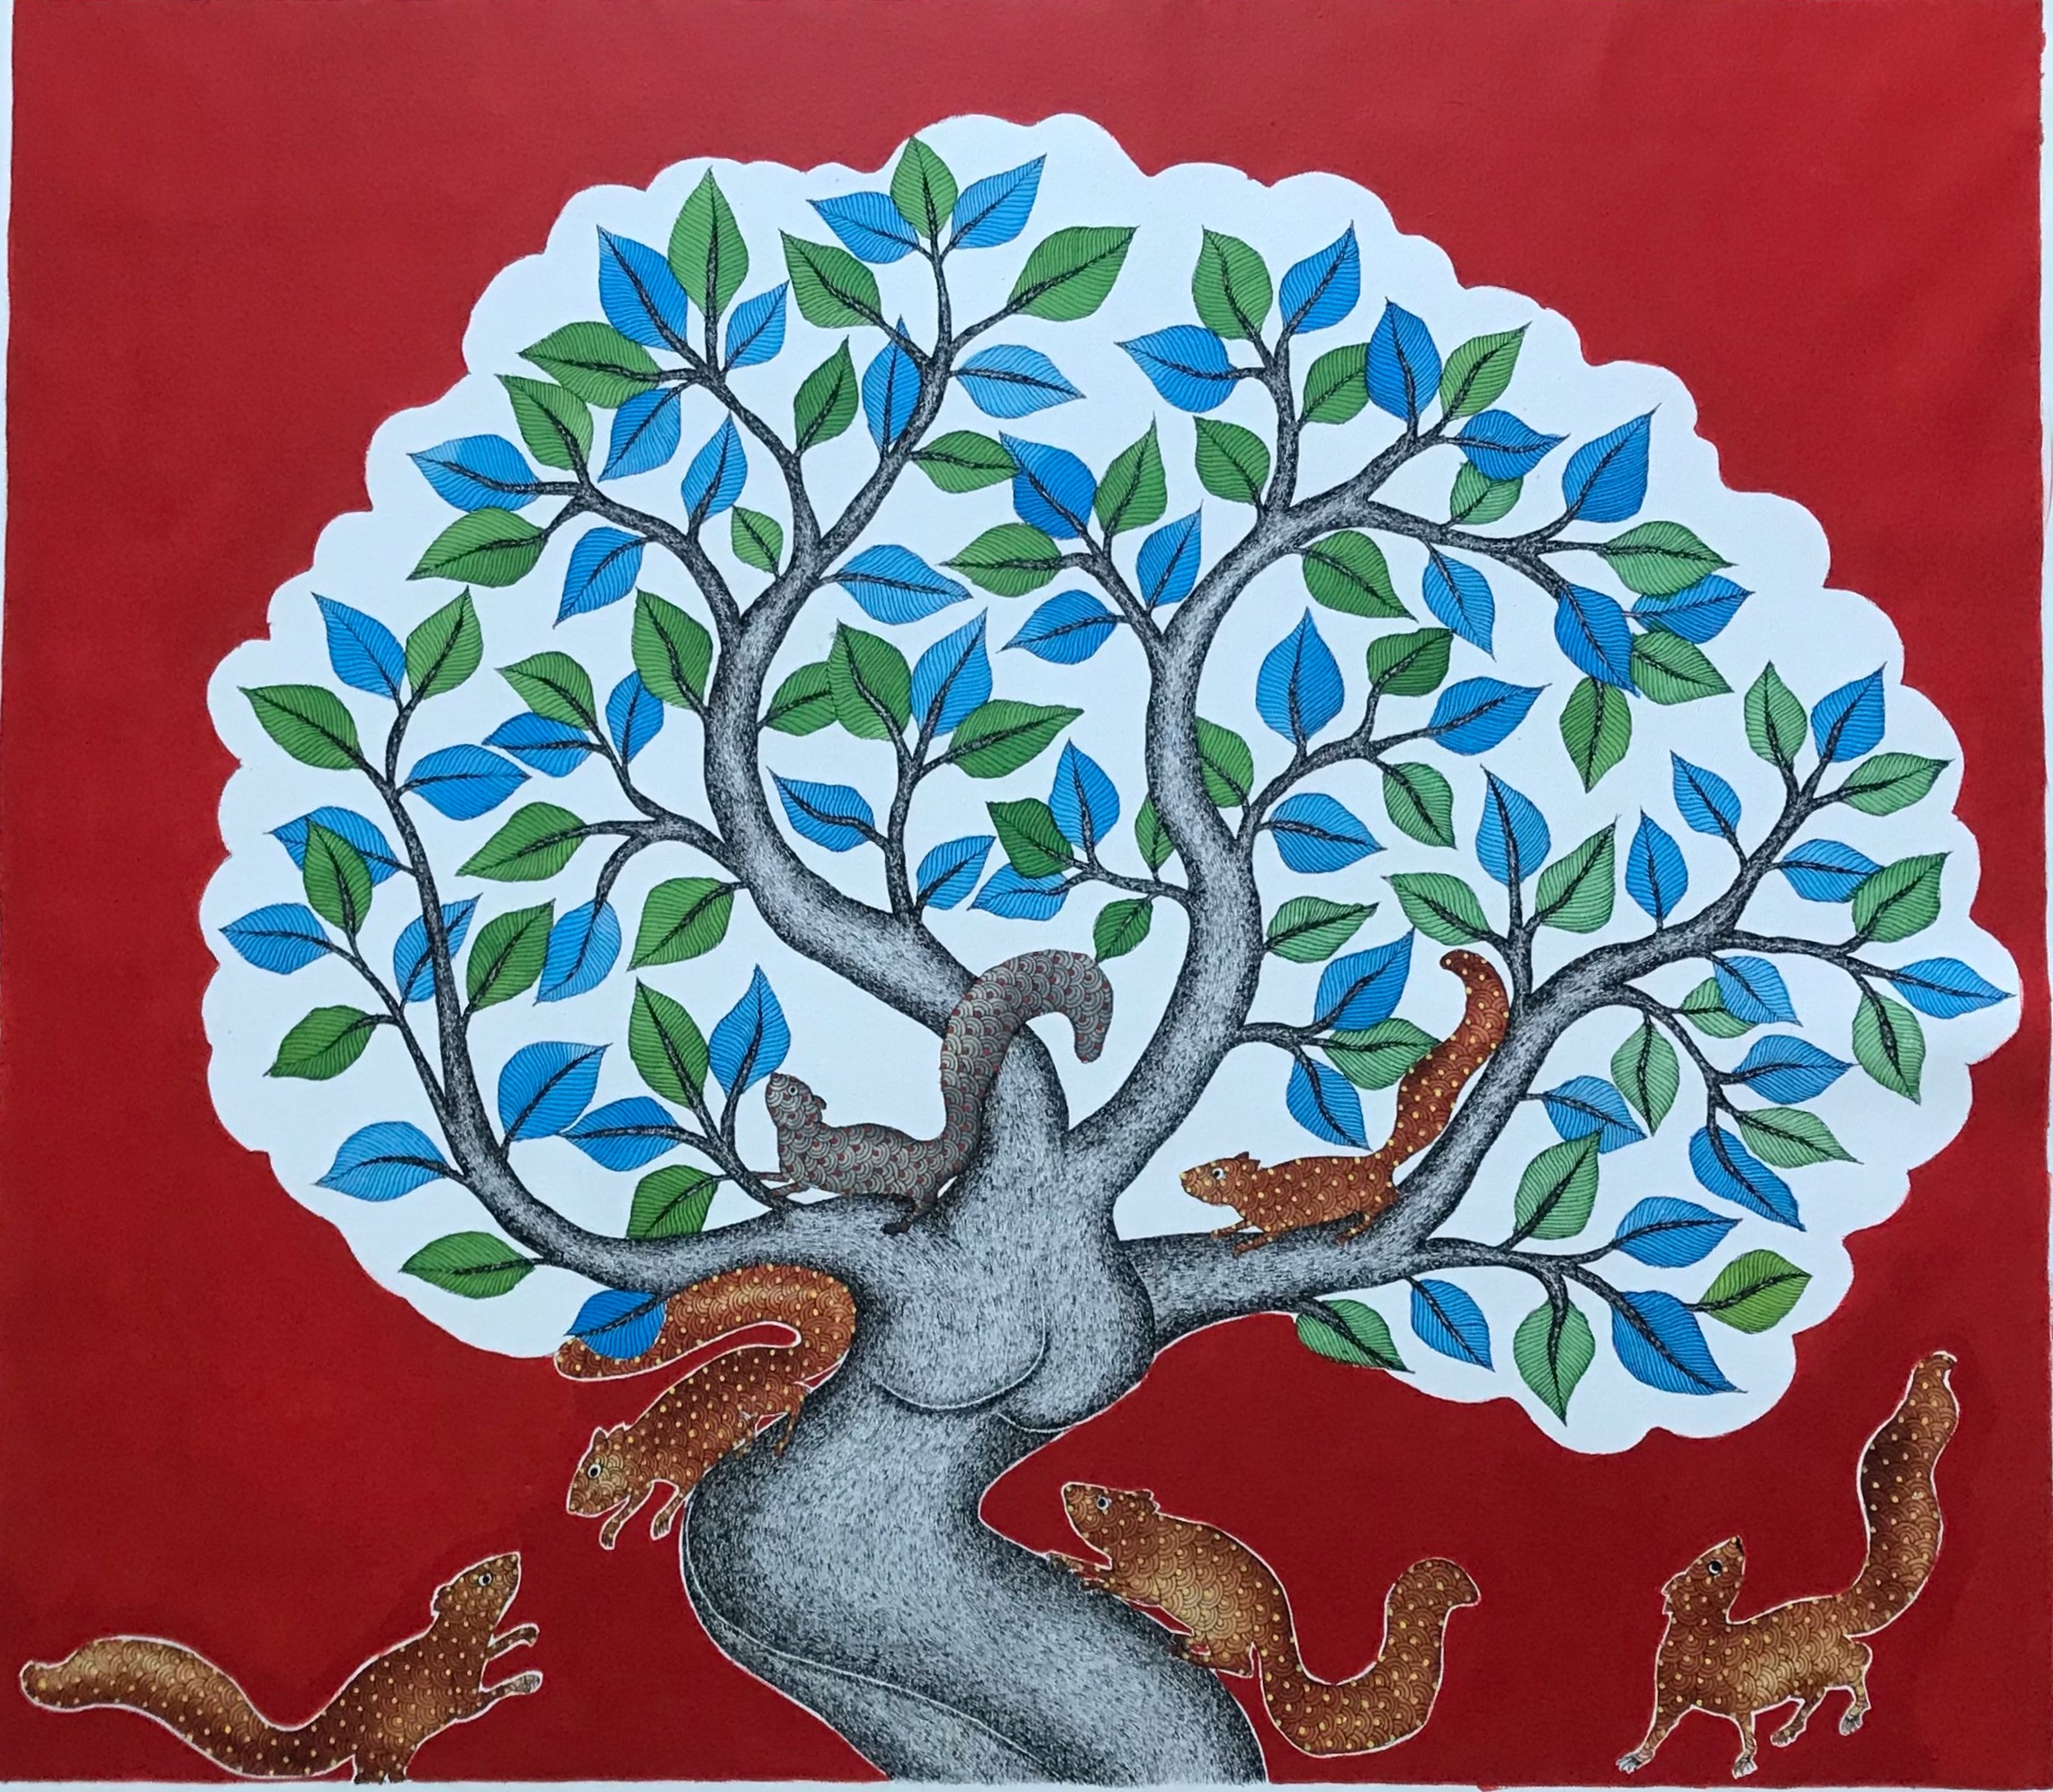  Pakari Tree by Venkat Raman Singh Shyam, acrylic on canvas 